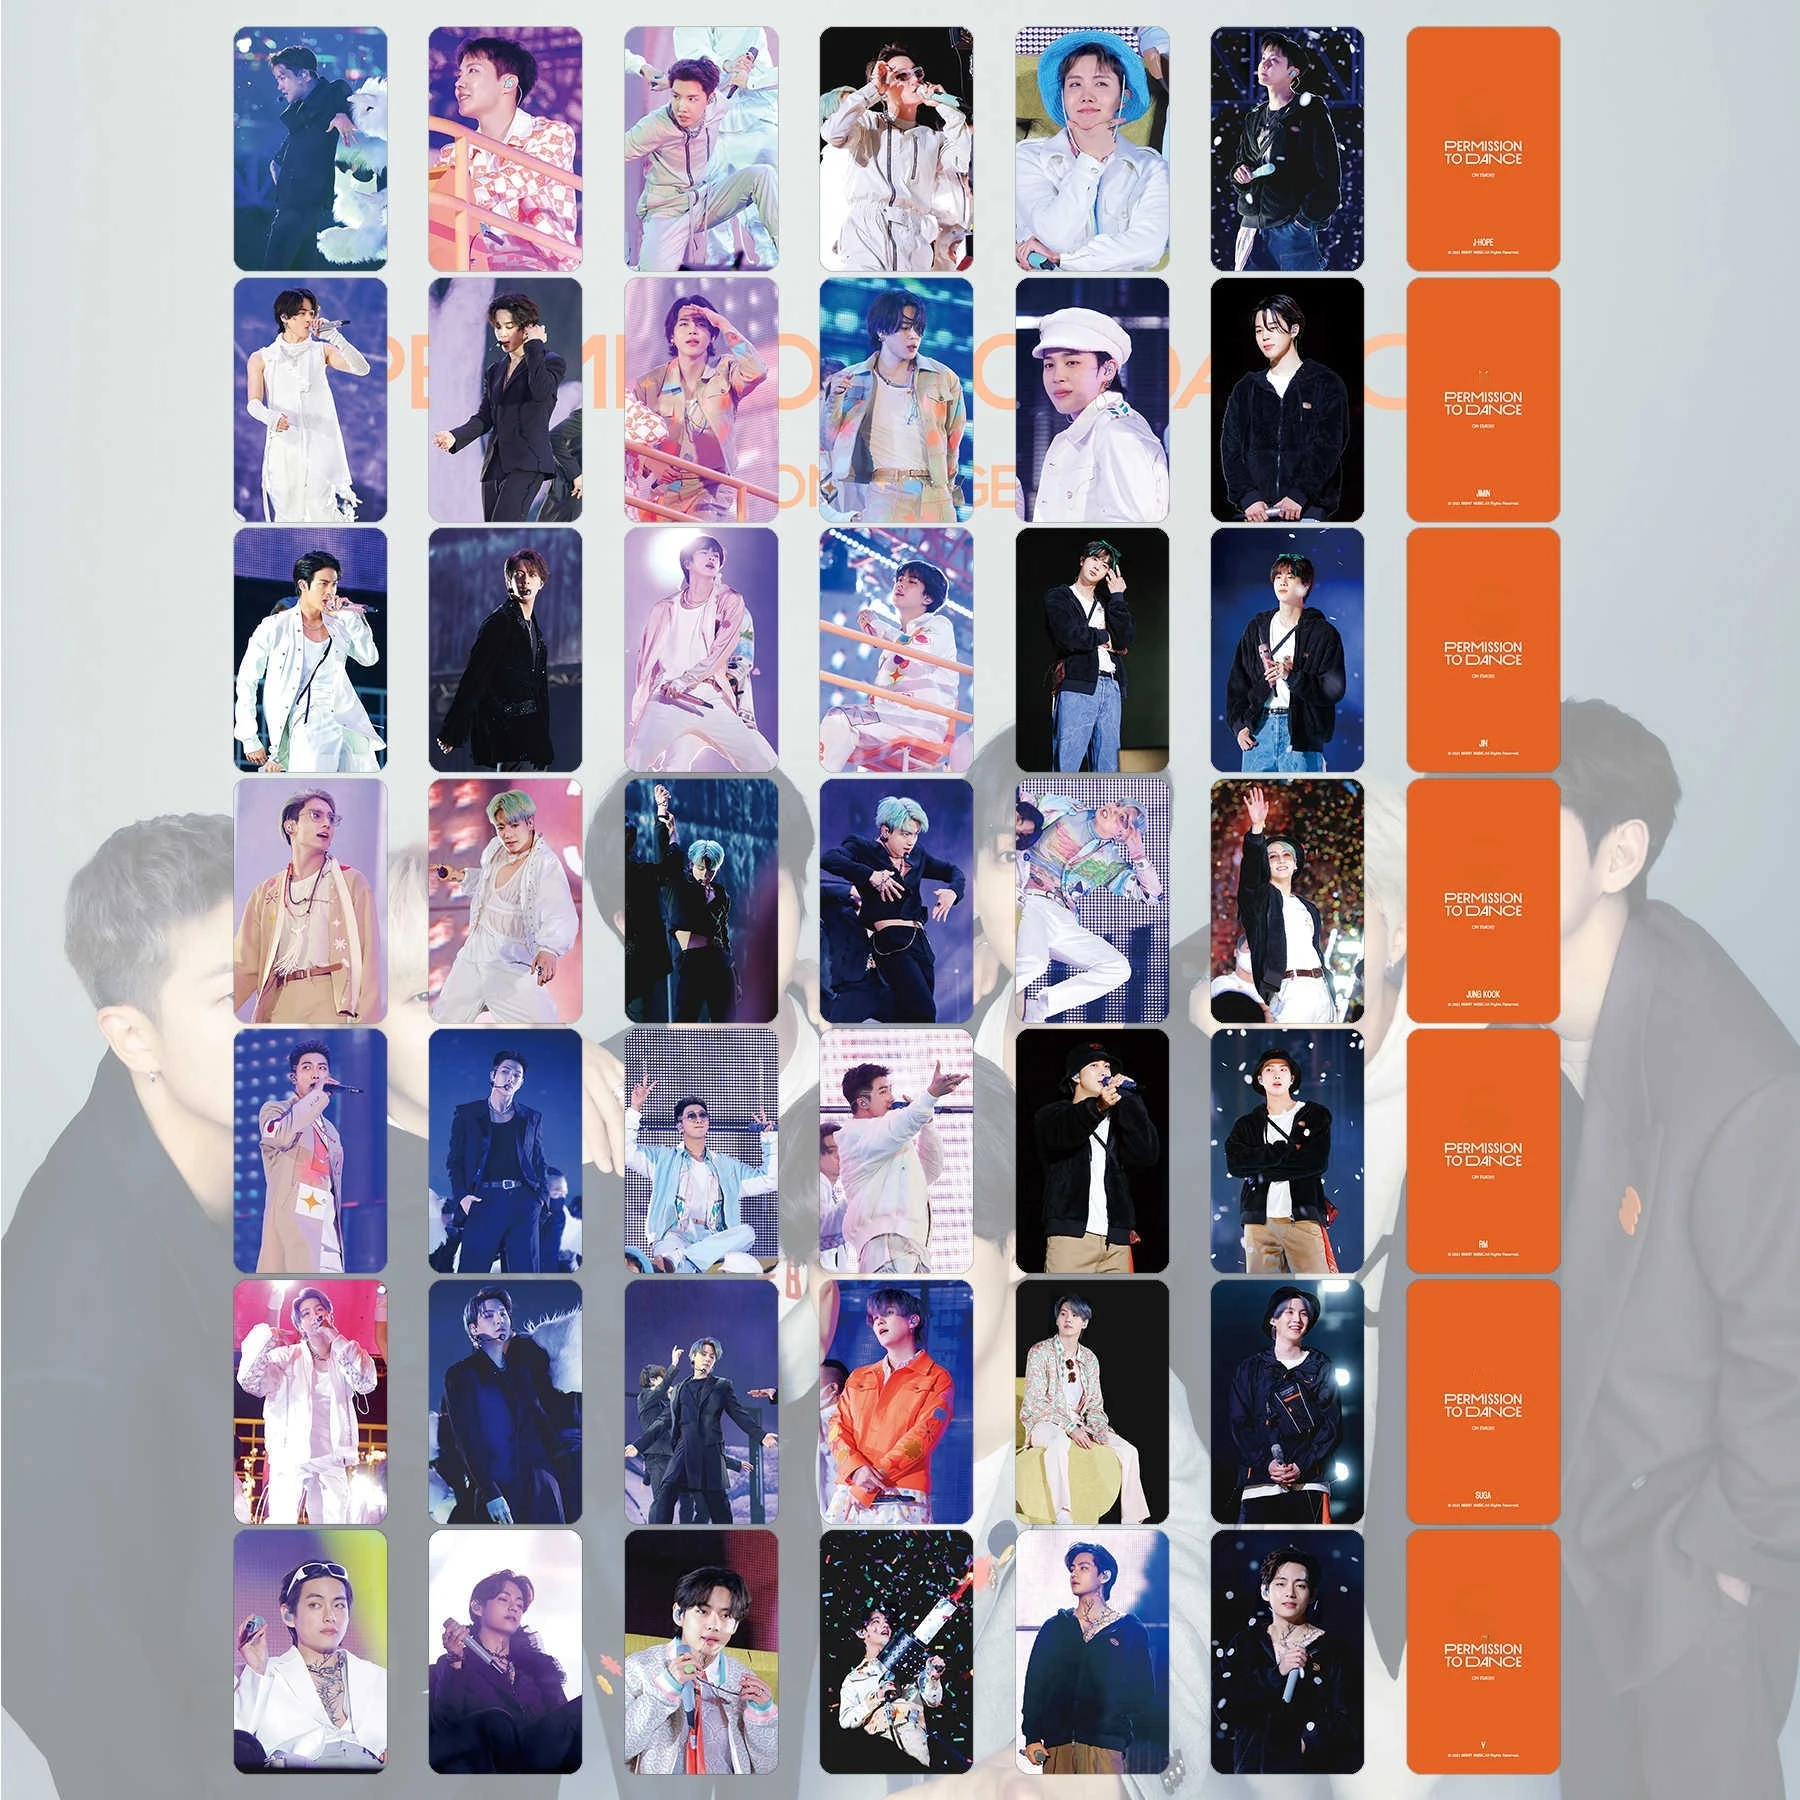 

6pcs/set KPOP Bangtan Boys PTD ON STAGE Concert PhotoCard LOMOCard Postcard New Korea Group Thank You Card K-POP JK V JIN SUGA